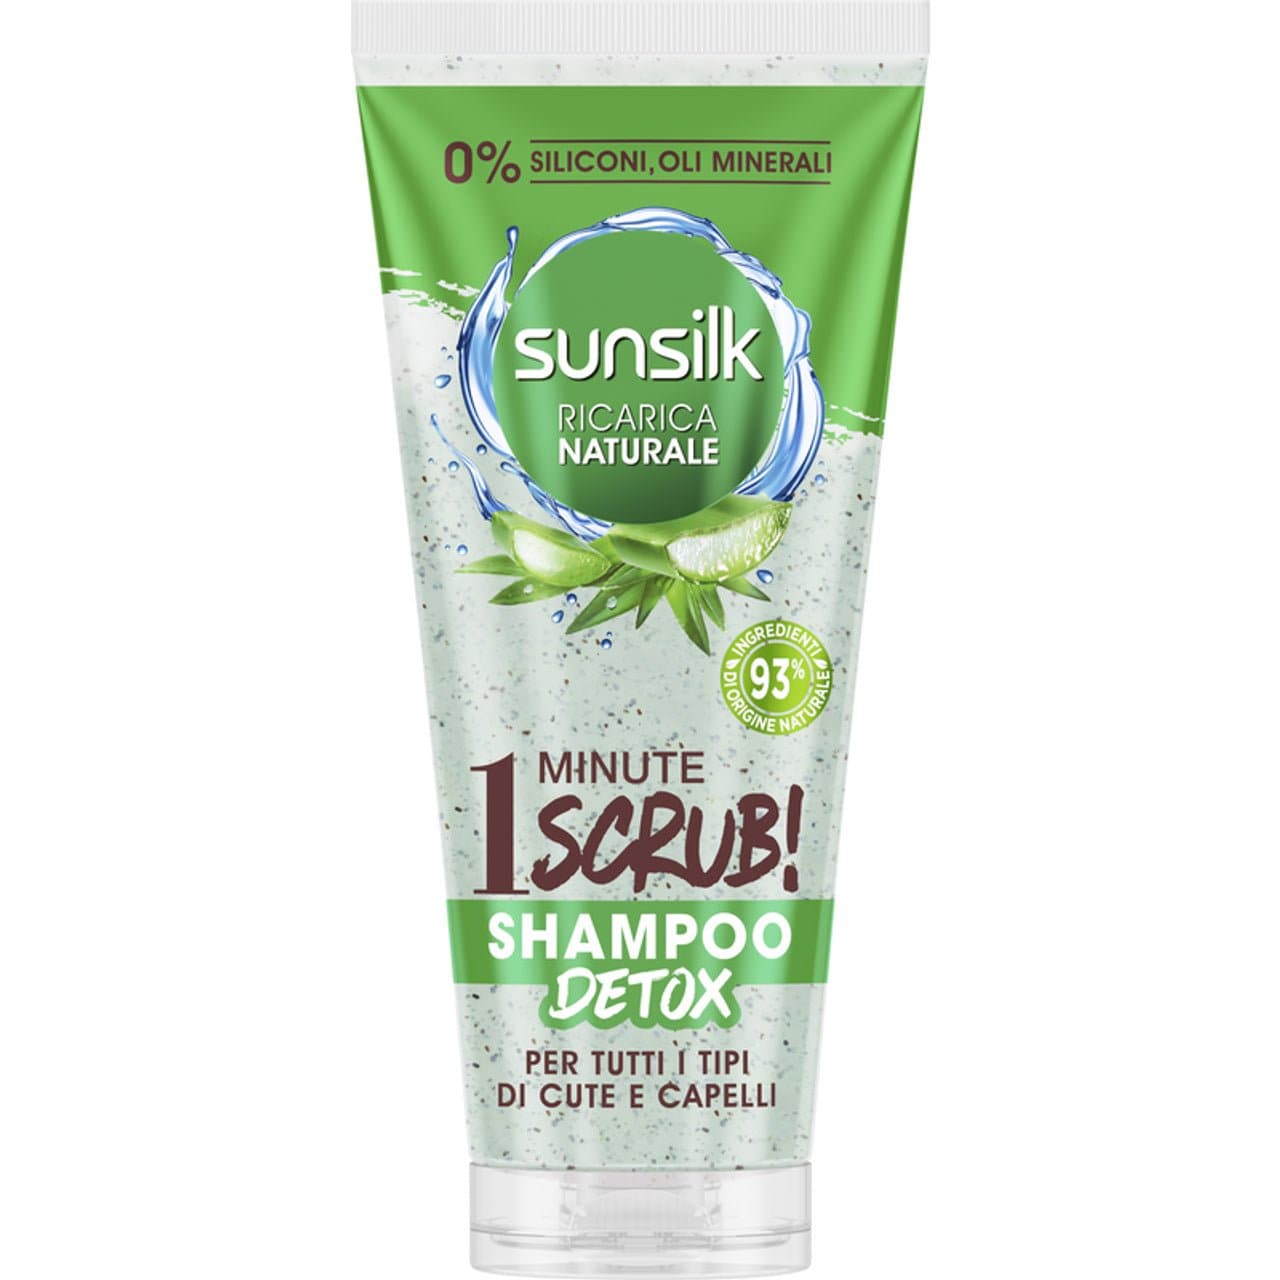 Sunsilk Shampoo Detox 1 Minute Scrub! Tutti i tipi di capelli - Jasmine Parfums- [ean]